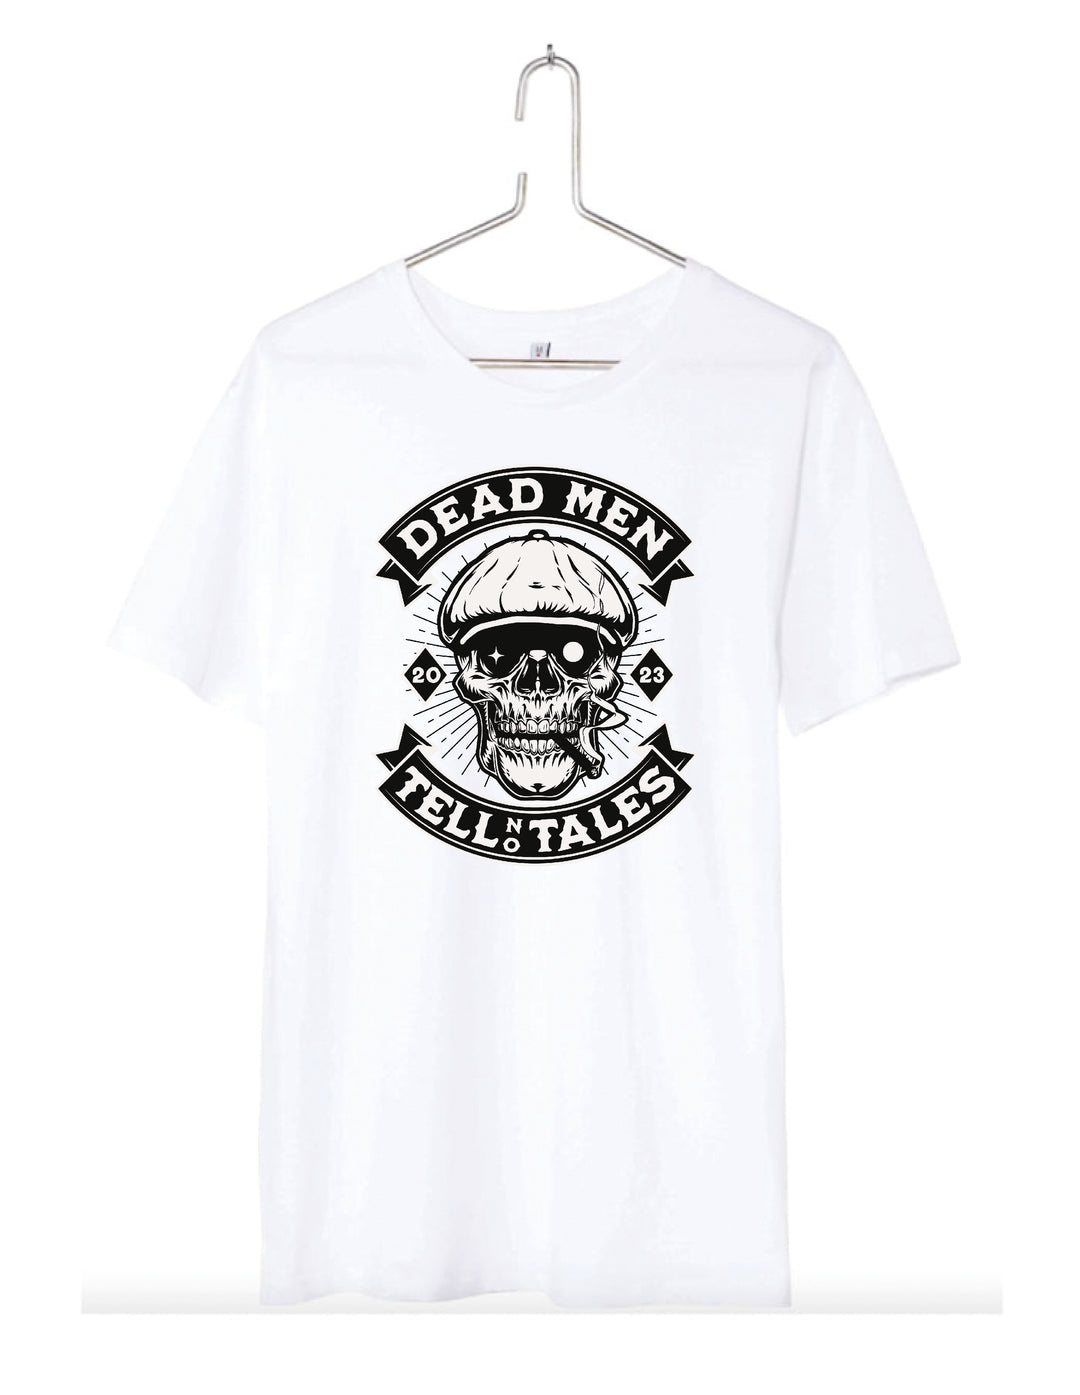 T-shirt homme Dead men tell no tales